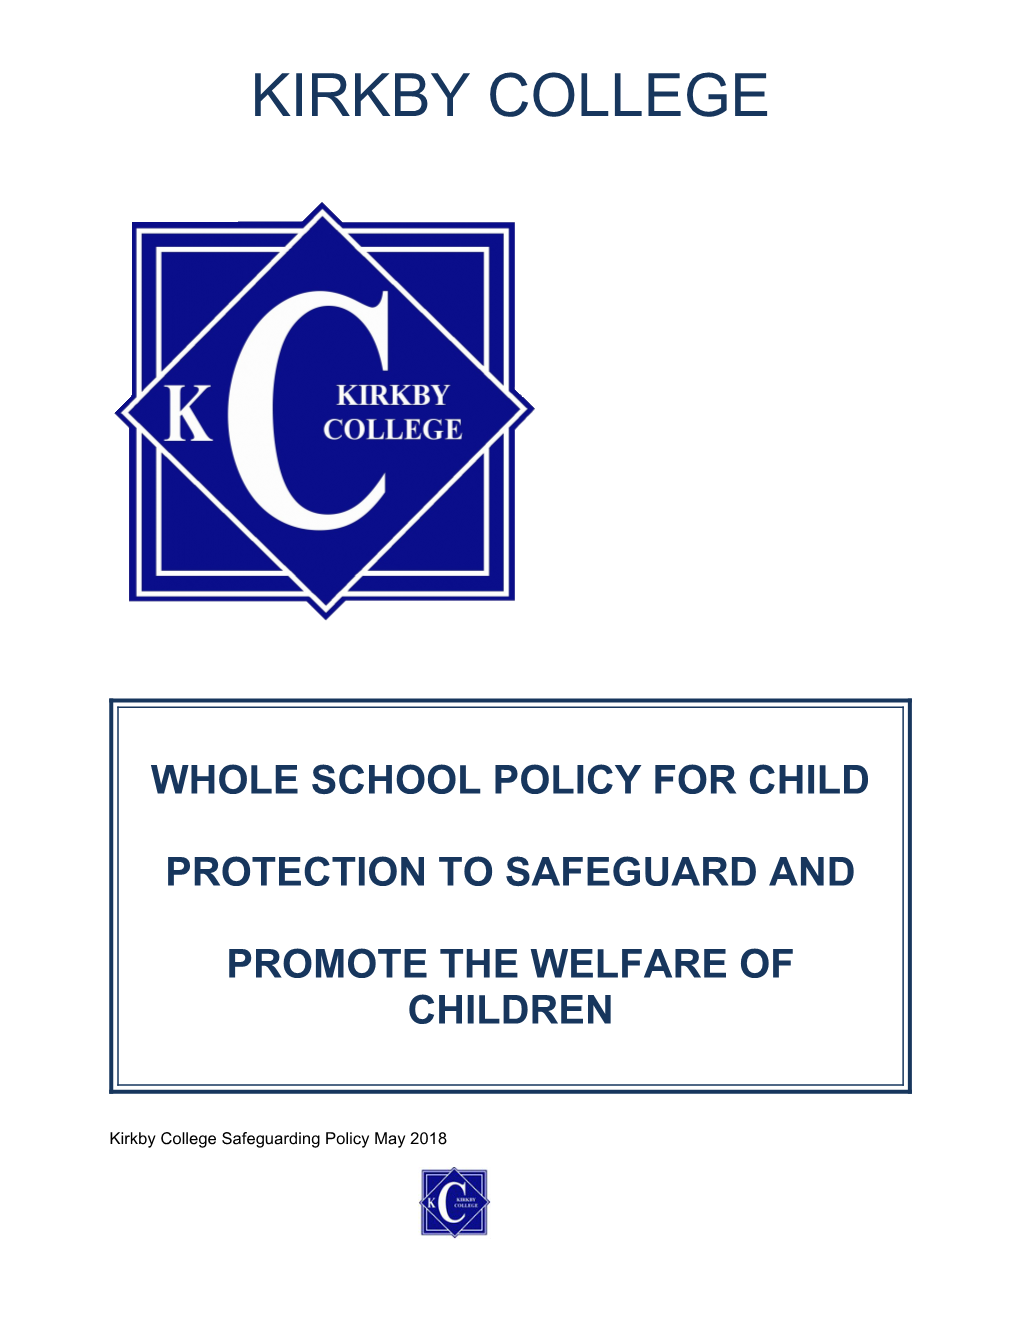 Promote the Welfare of Children